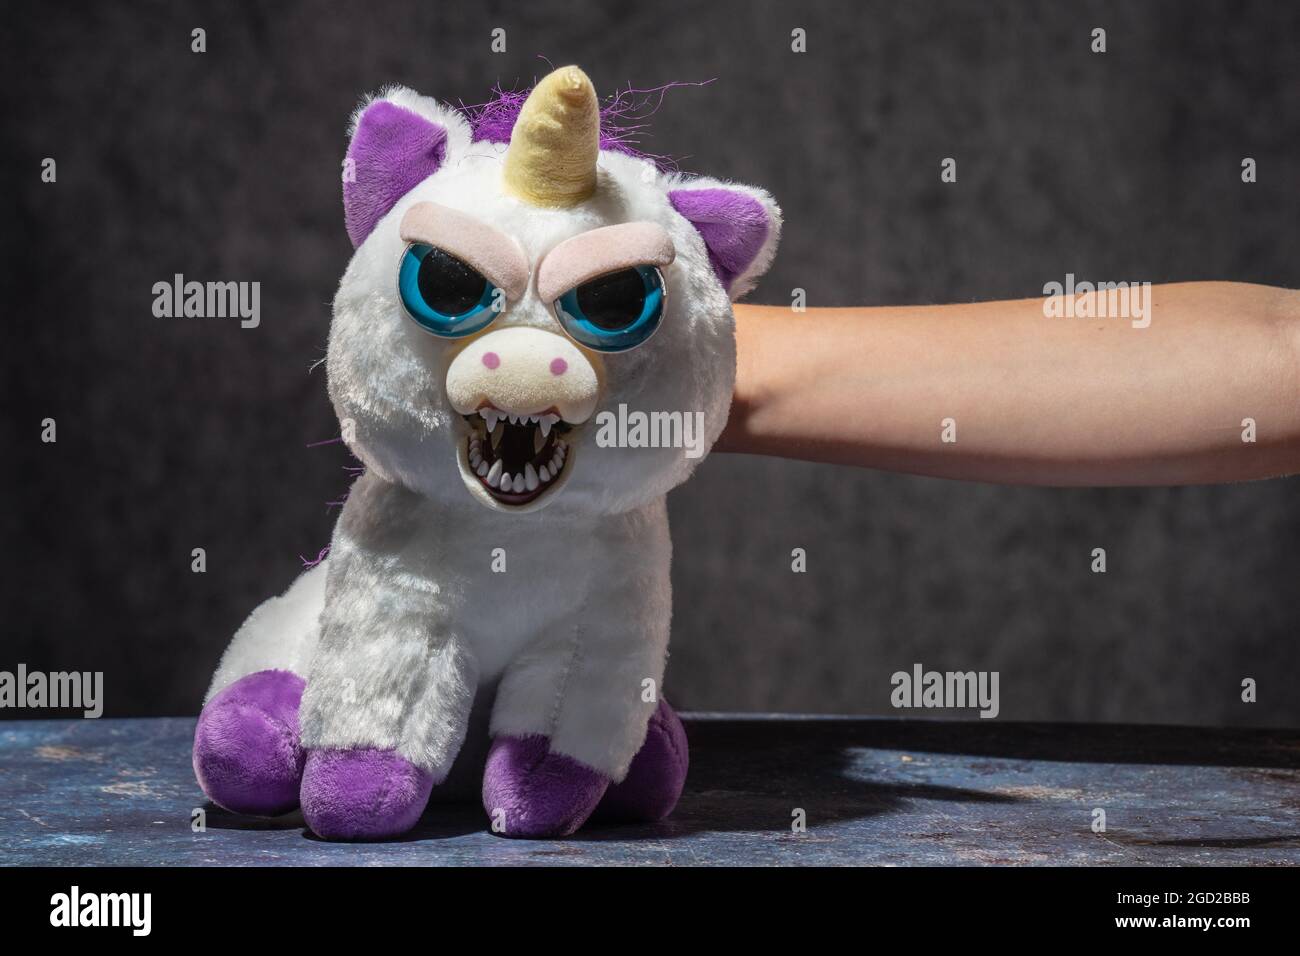 Feisty Pet Unicorn Plush stuffed with attitude Stock Photo - Alamy